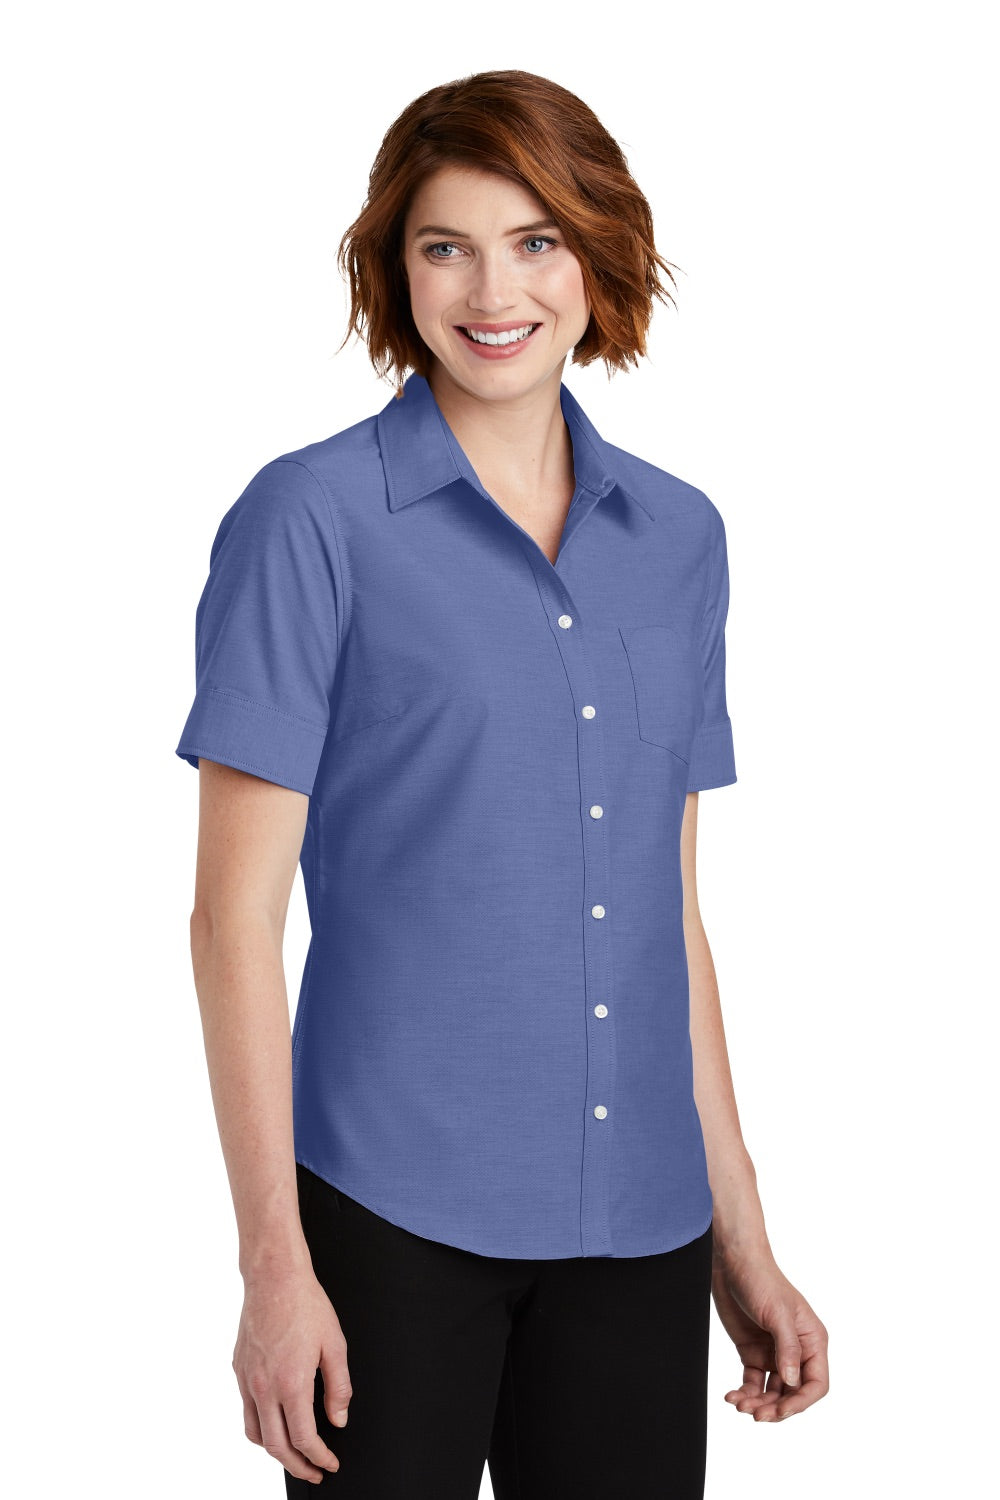 Port Authority L659 Womens SuperPro Oxford Wrinkle Resistant Short Sleeve Button Down Shirt w/ Pocket Navy Blue 3Q